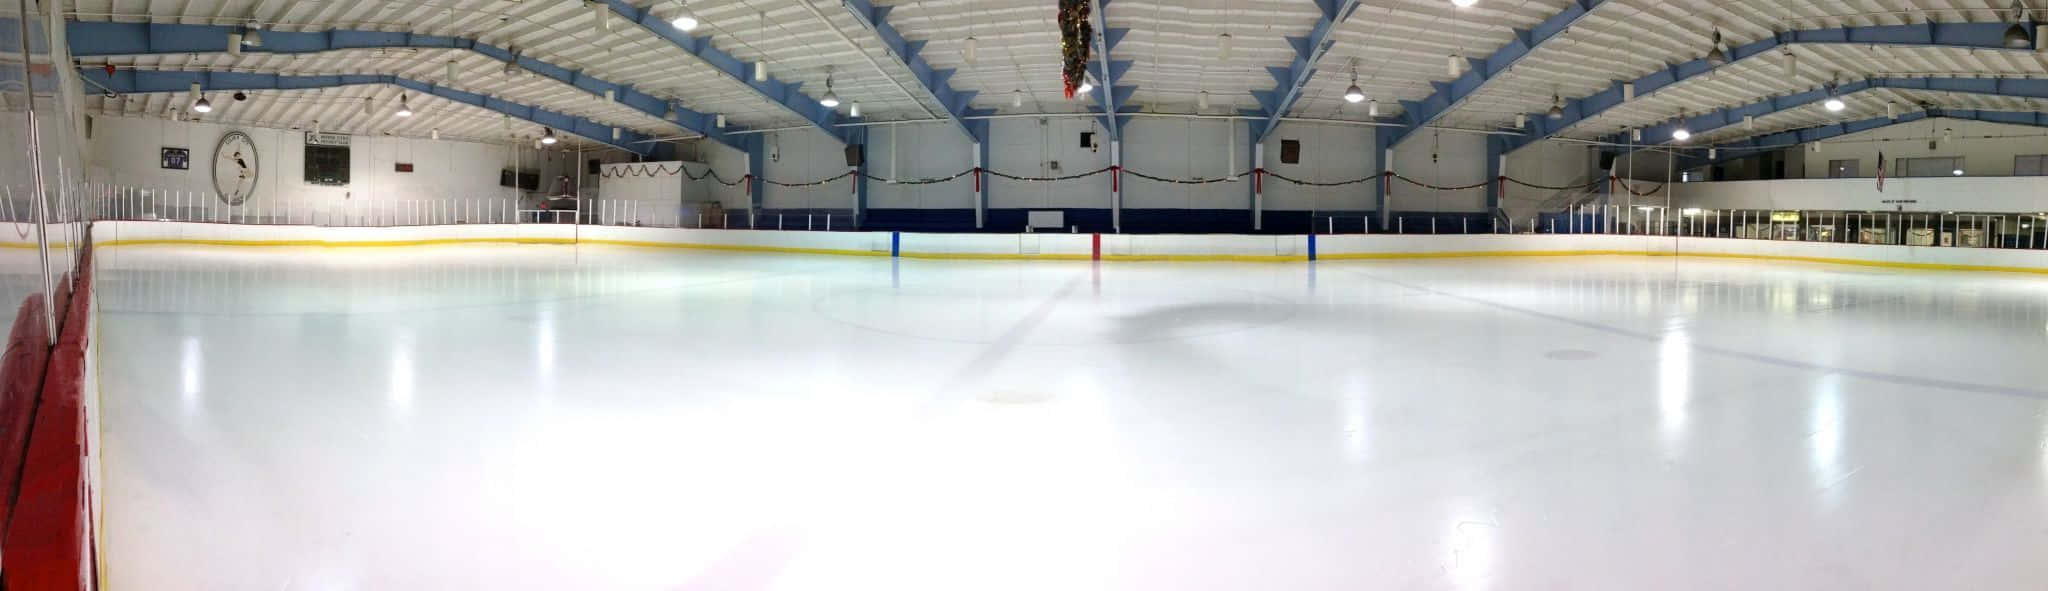 Gliding at Twilight: Ice Skating under a Mesmerizing Sky Wallpaper